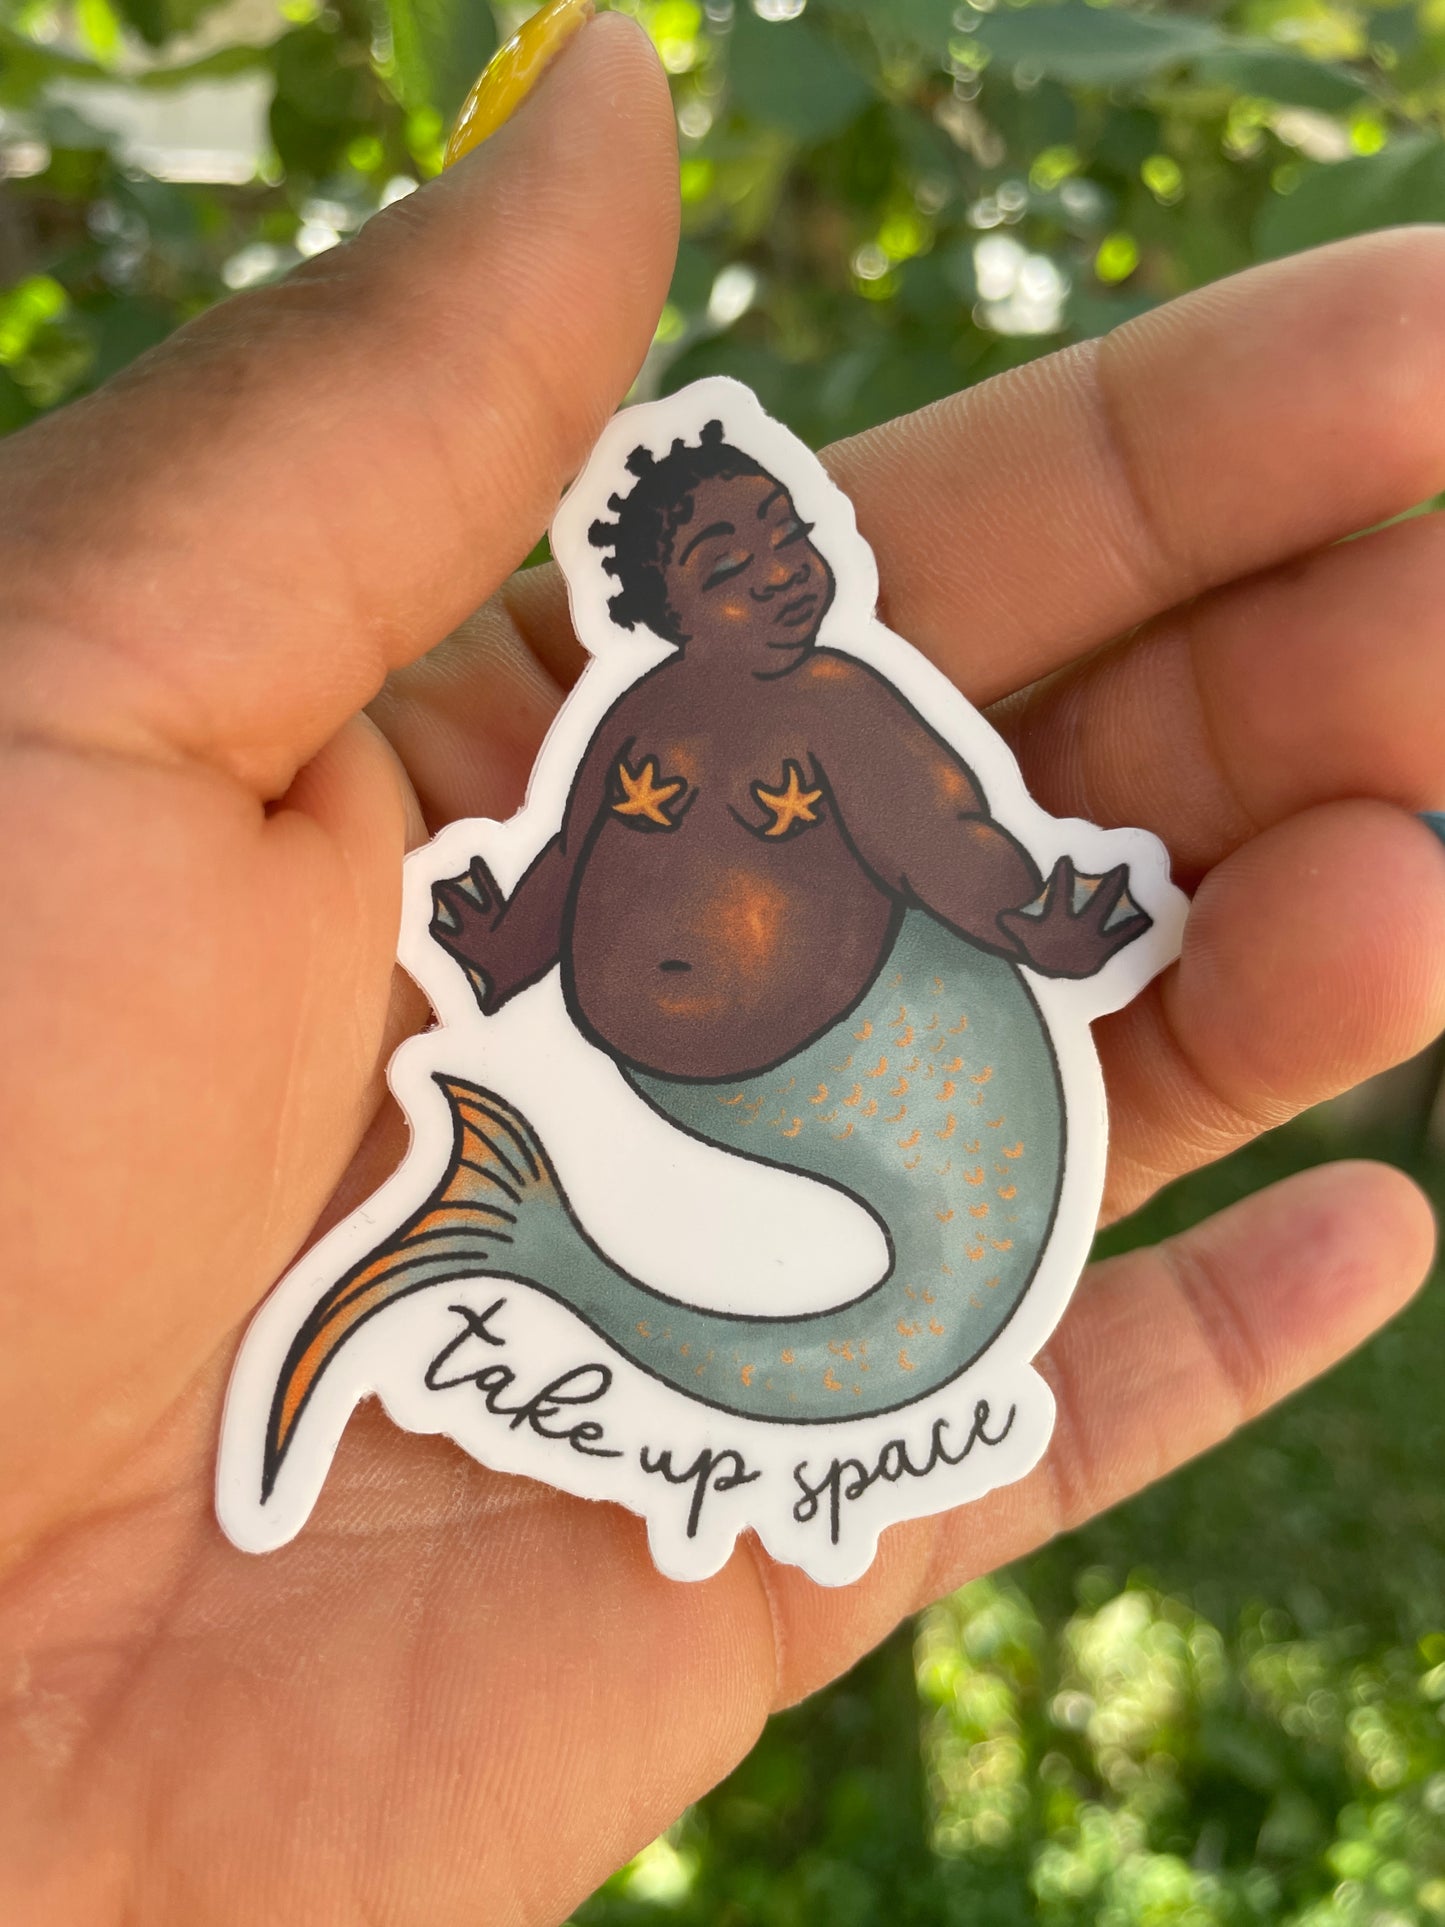 Chubby Mermaid “Take Up Space” Sticker